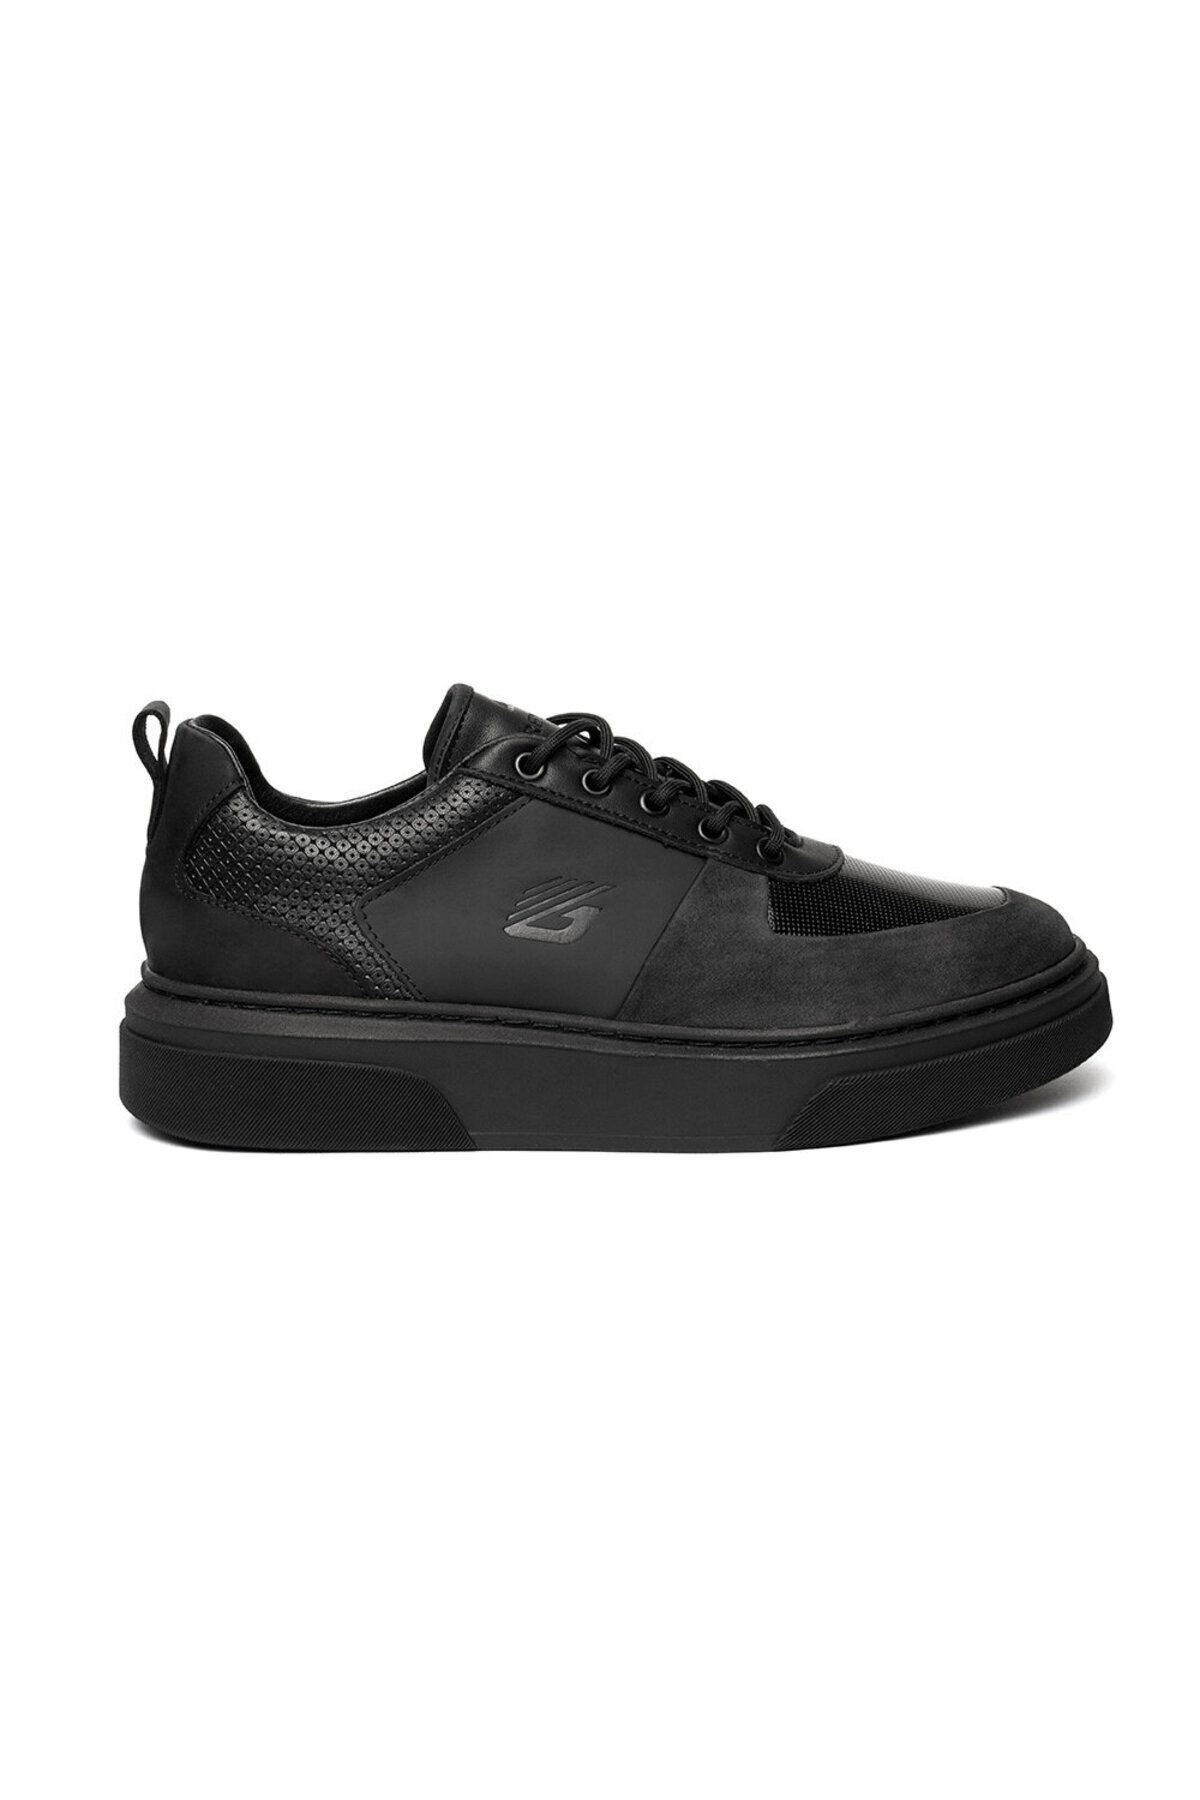 Greyder Erkek Siyah Hakiki Deri Sneaker Ayakkabı 3k1sa16410